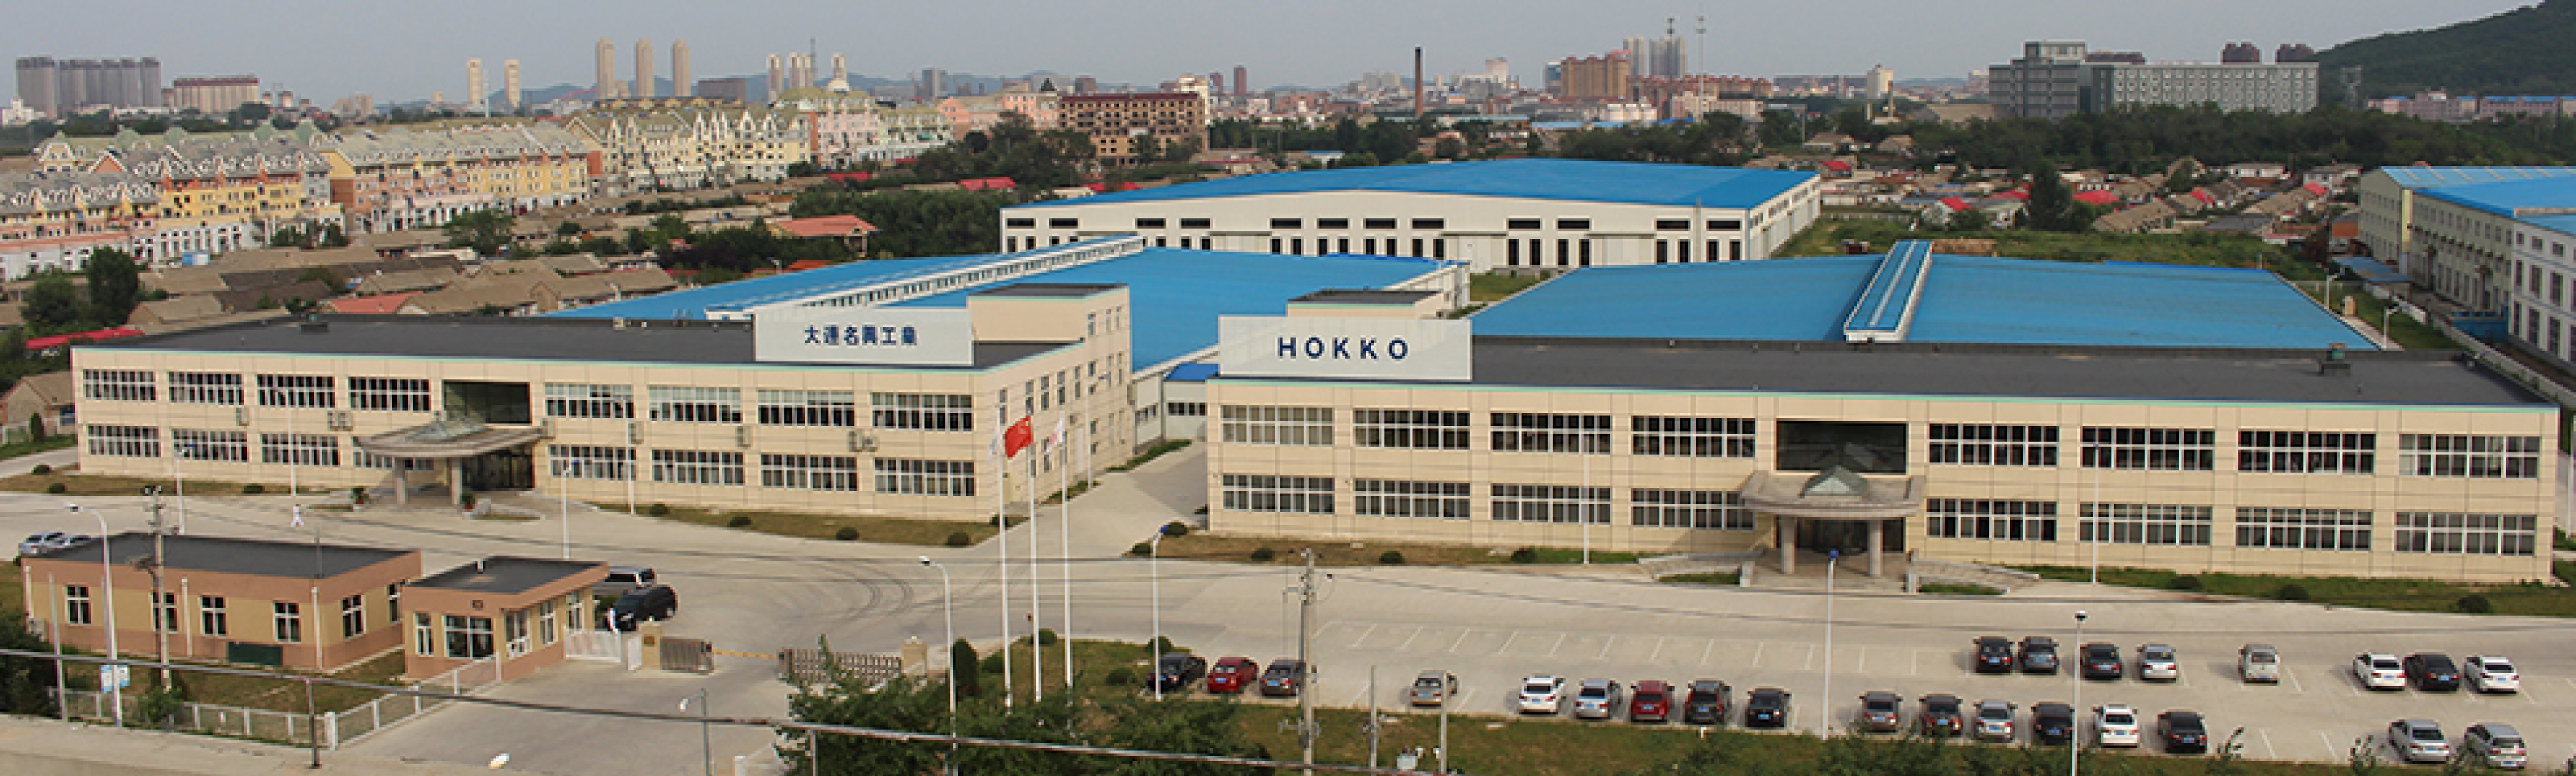 Dalian Meikou Industry Company, Ltd.